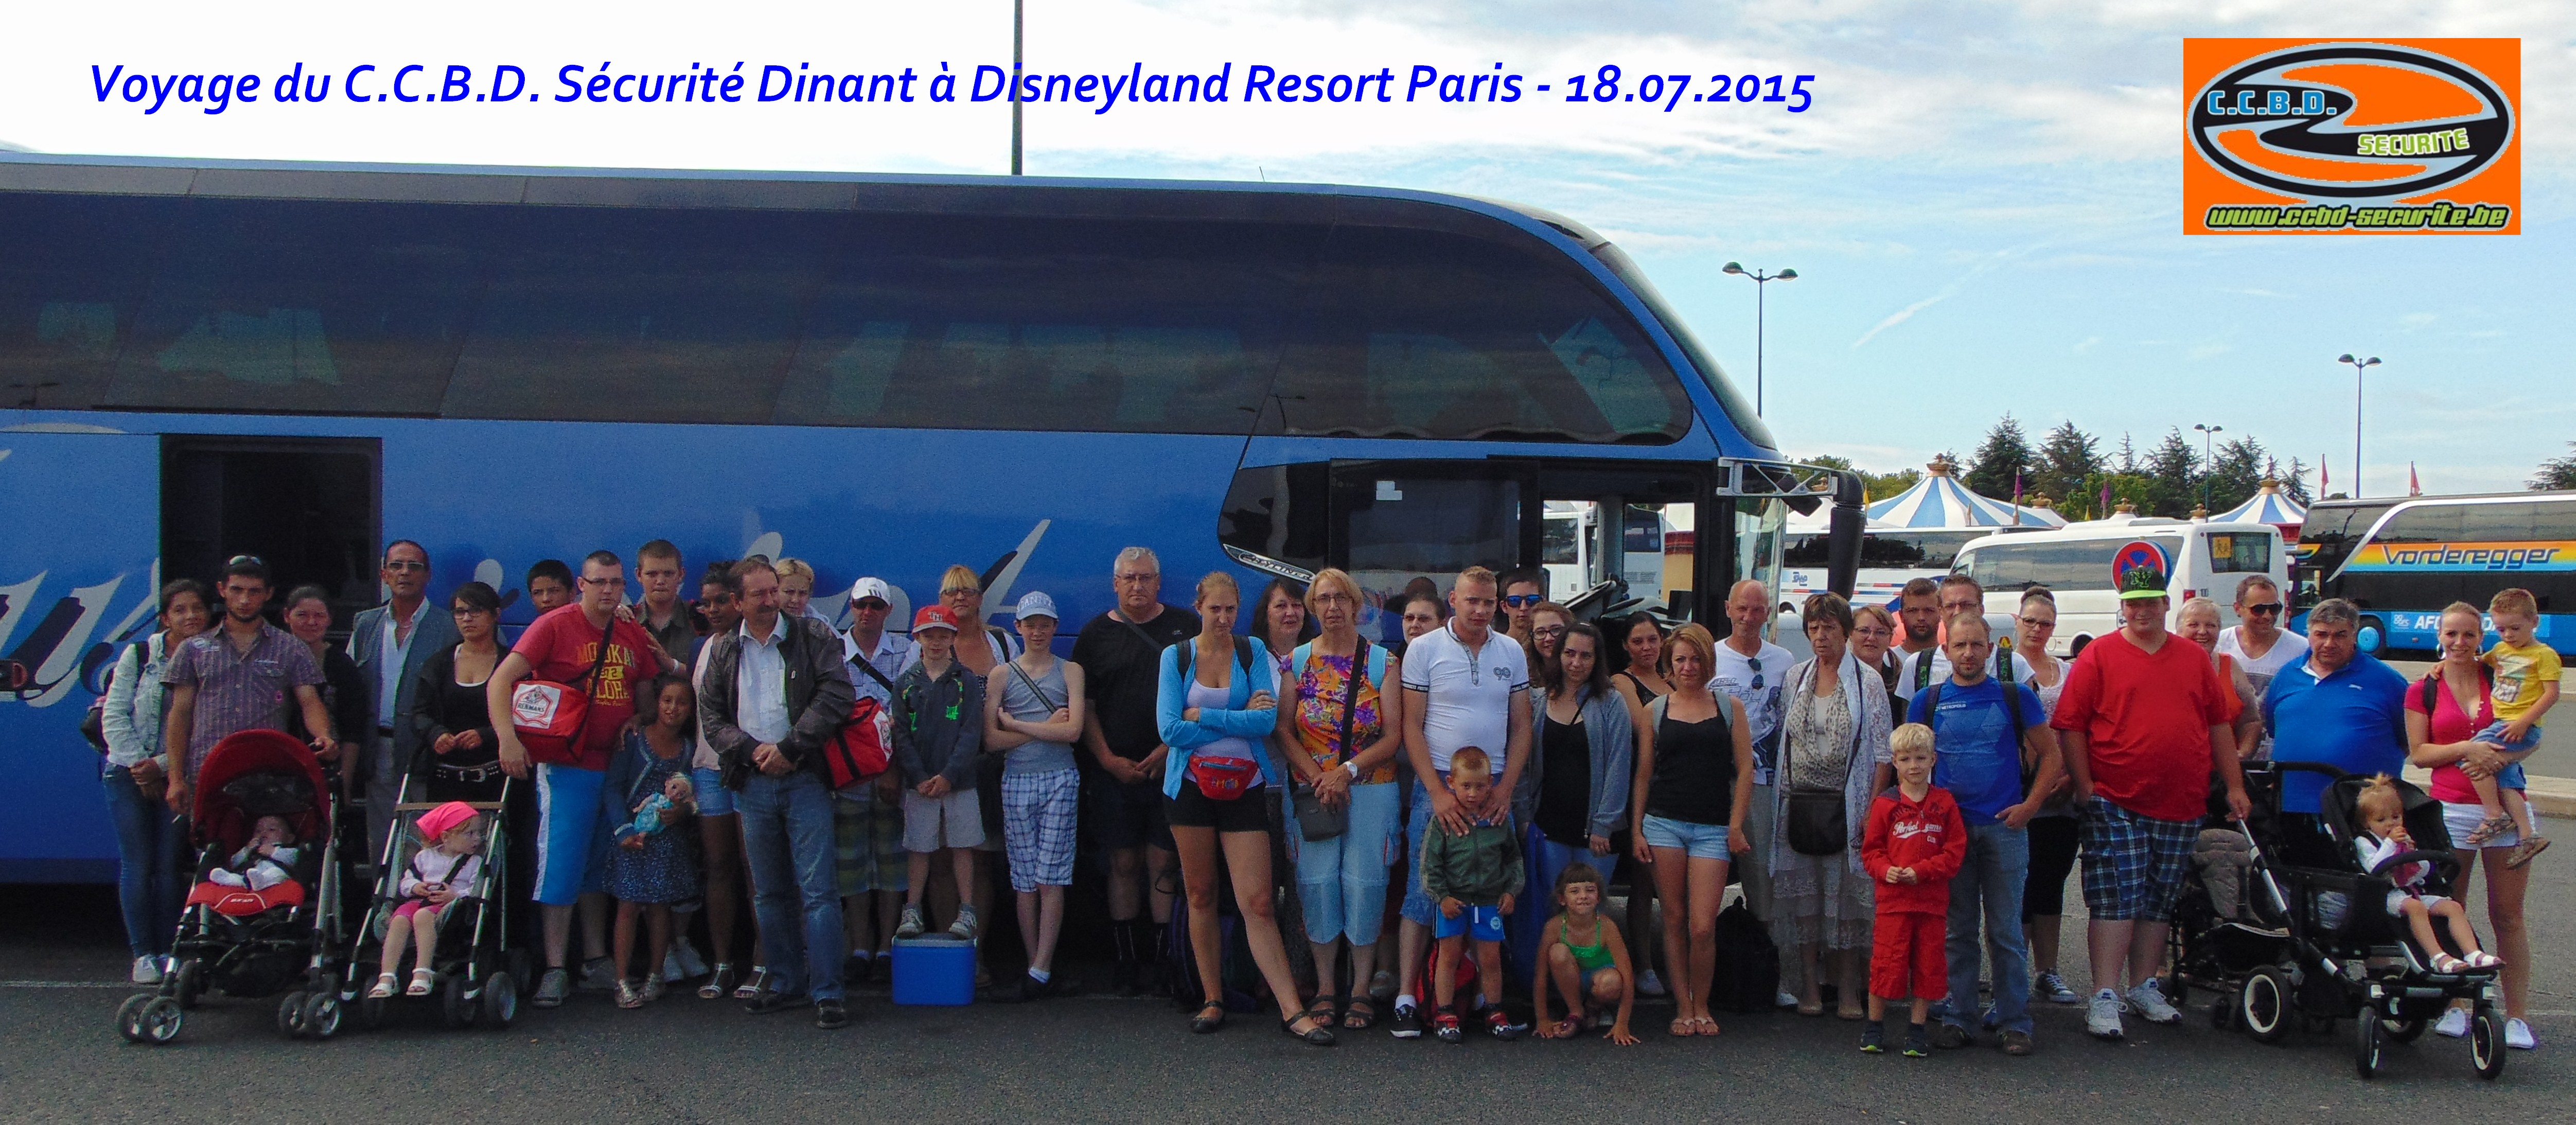 Voyage du 18-07-2015 au Parc Disneyland Resort Paris